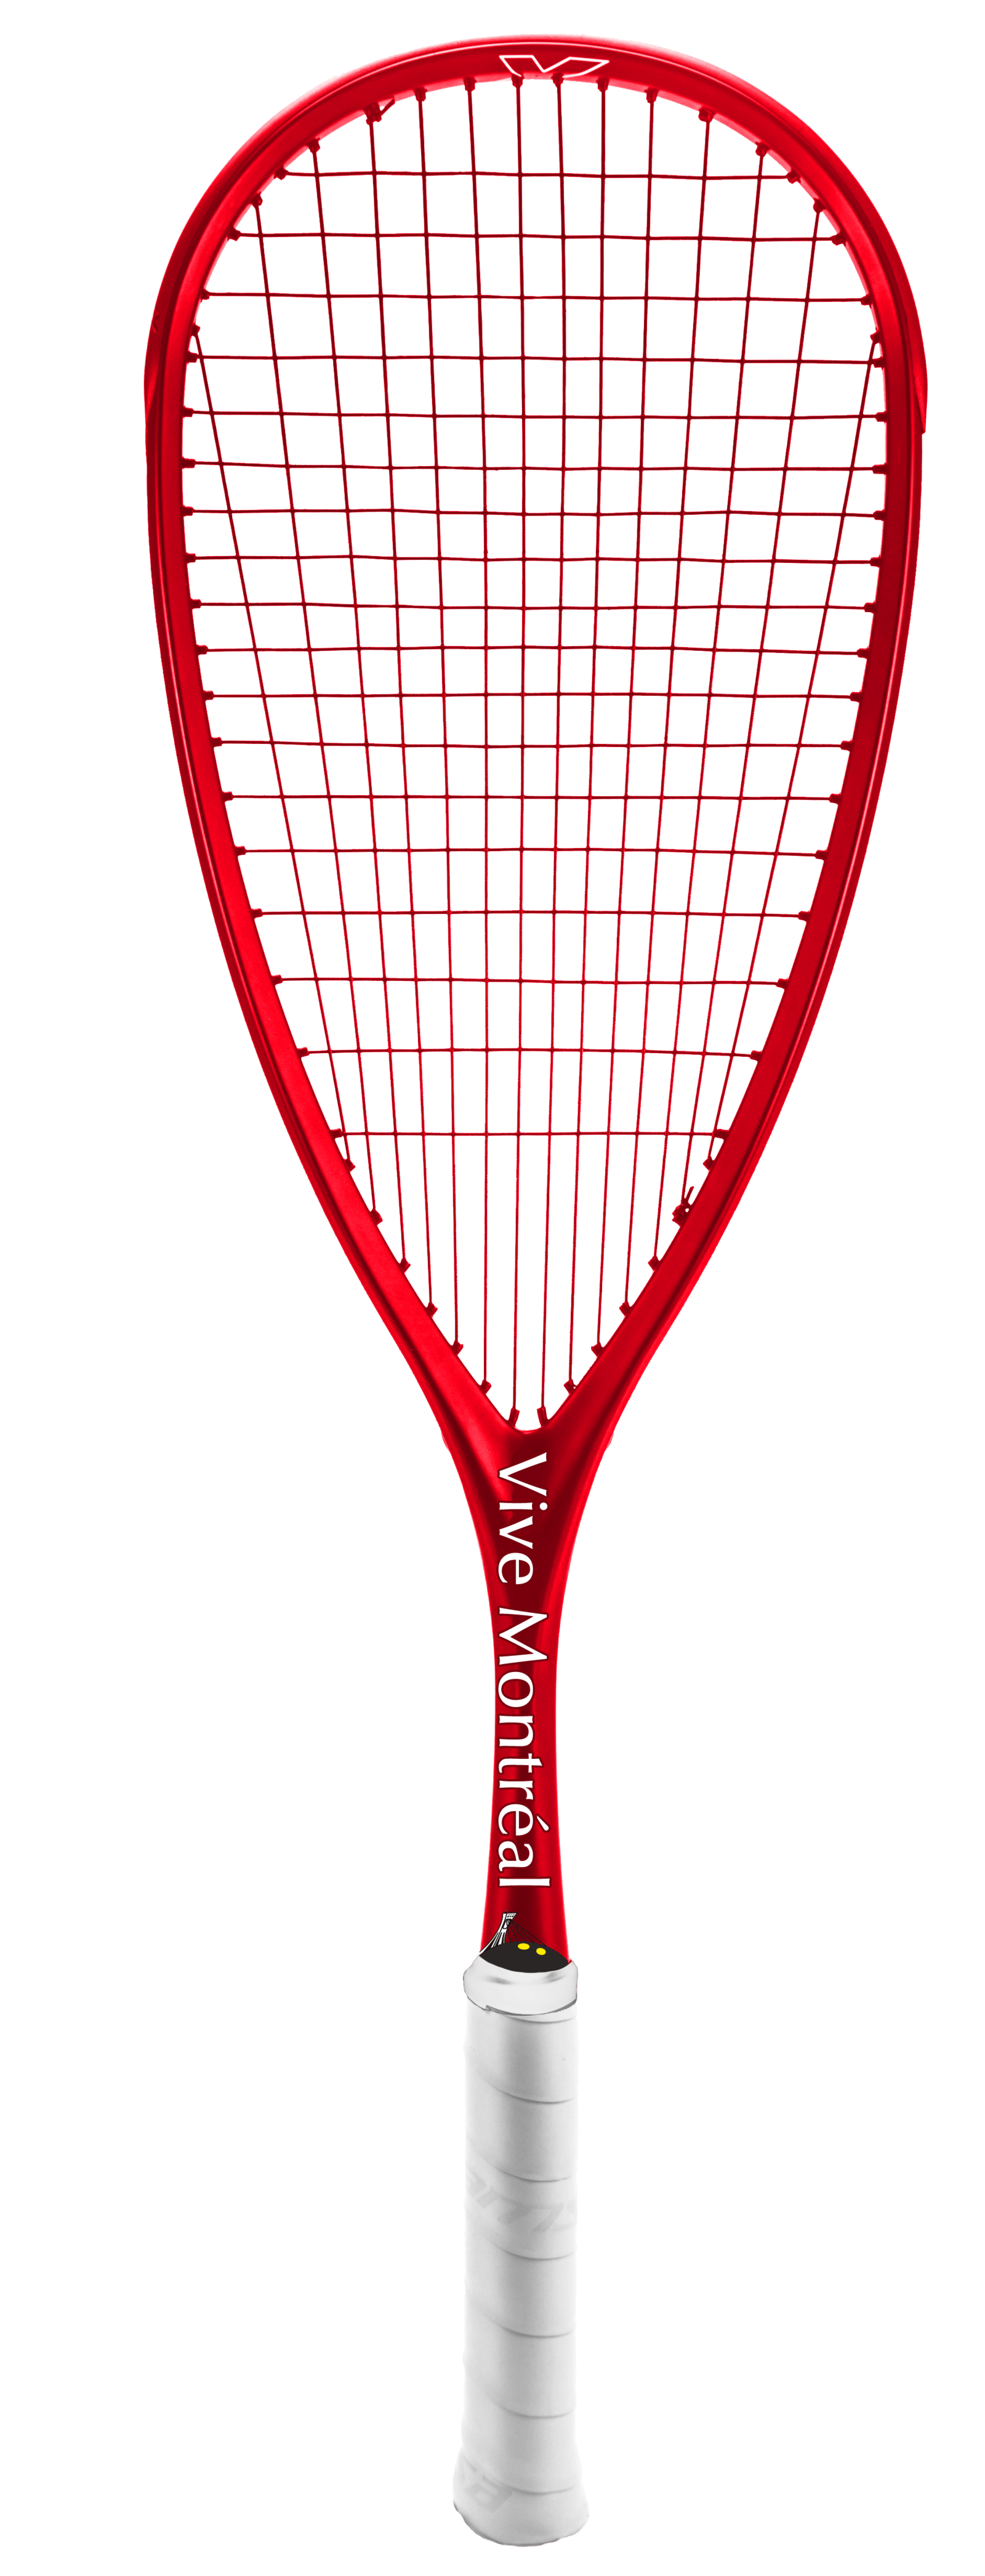 Xamsa Onyx eXposed - O Canada! - Limited Edition Squash Racquet